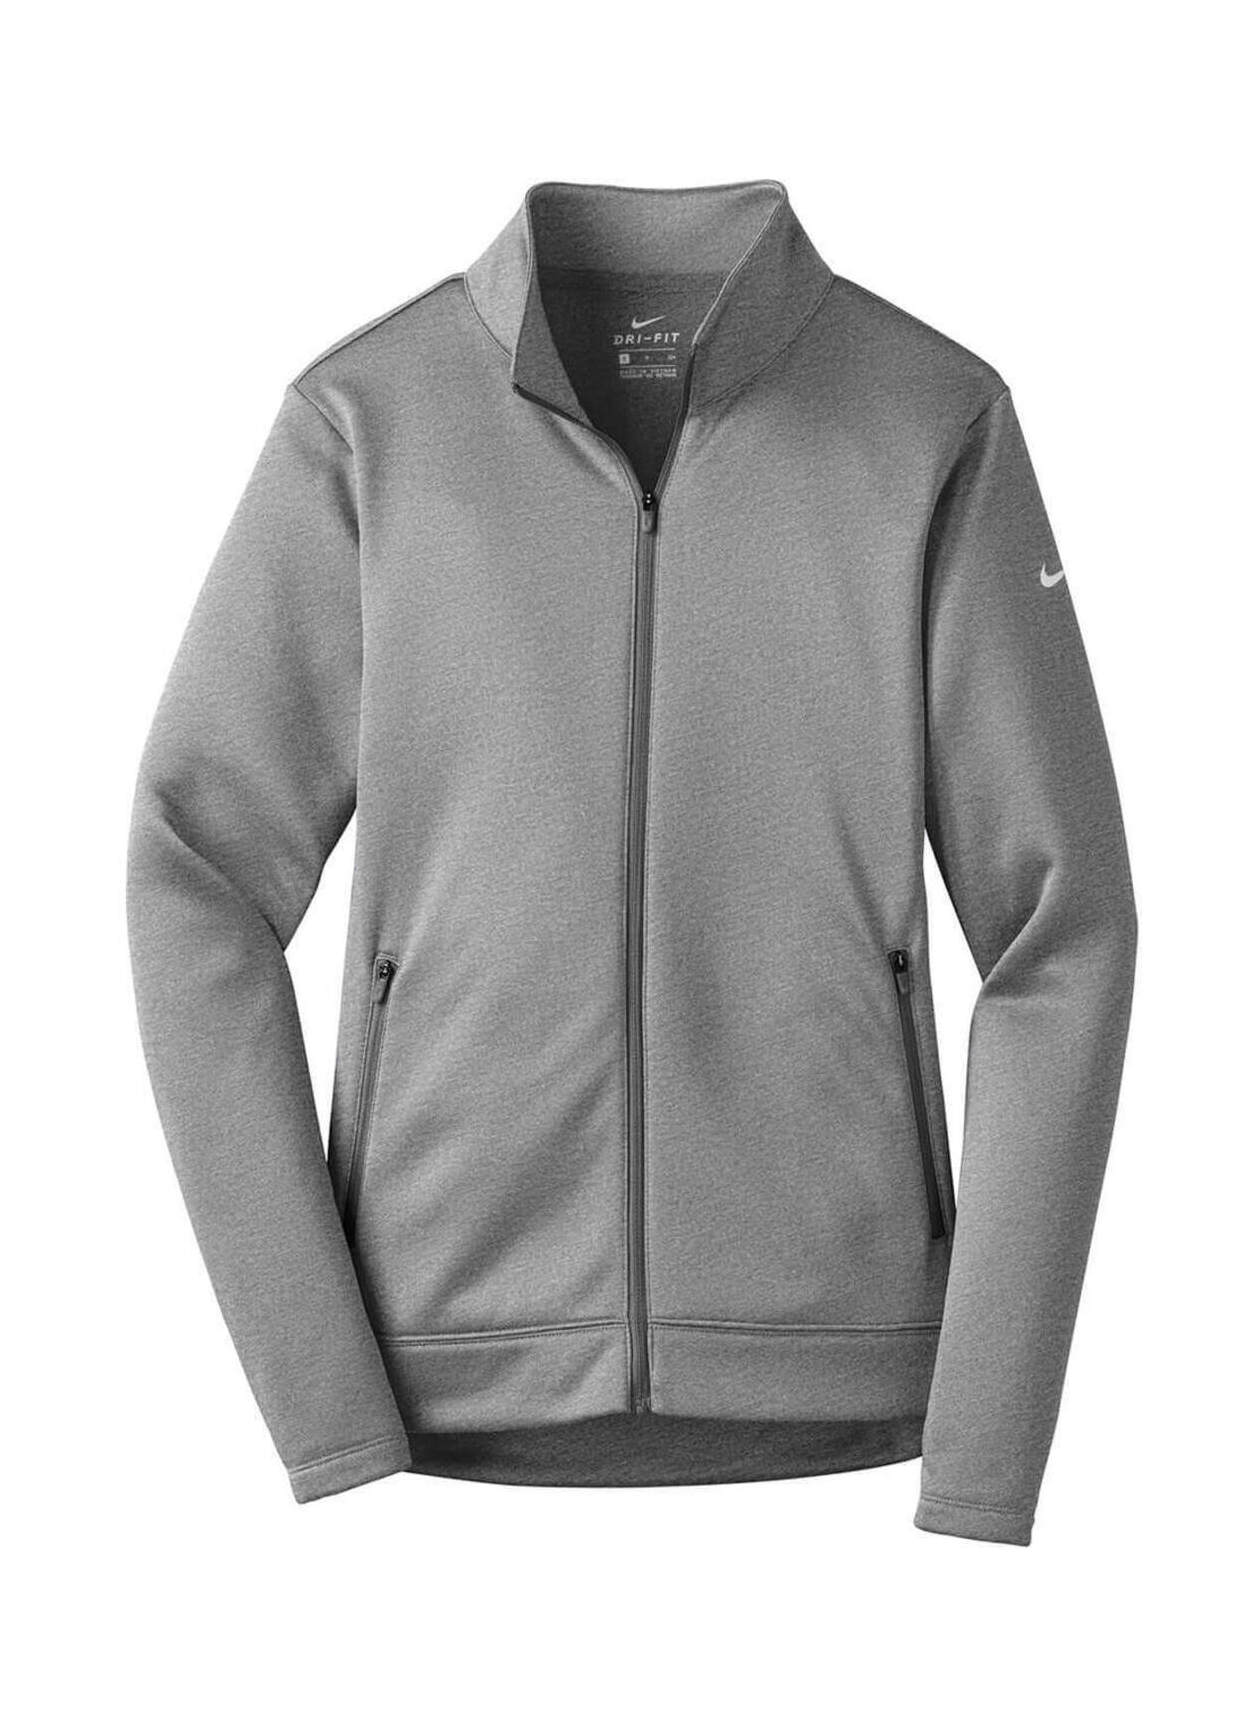 Nike Women's Dark Grey Heather Therma-FIT Fleece Jacket